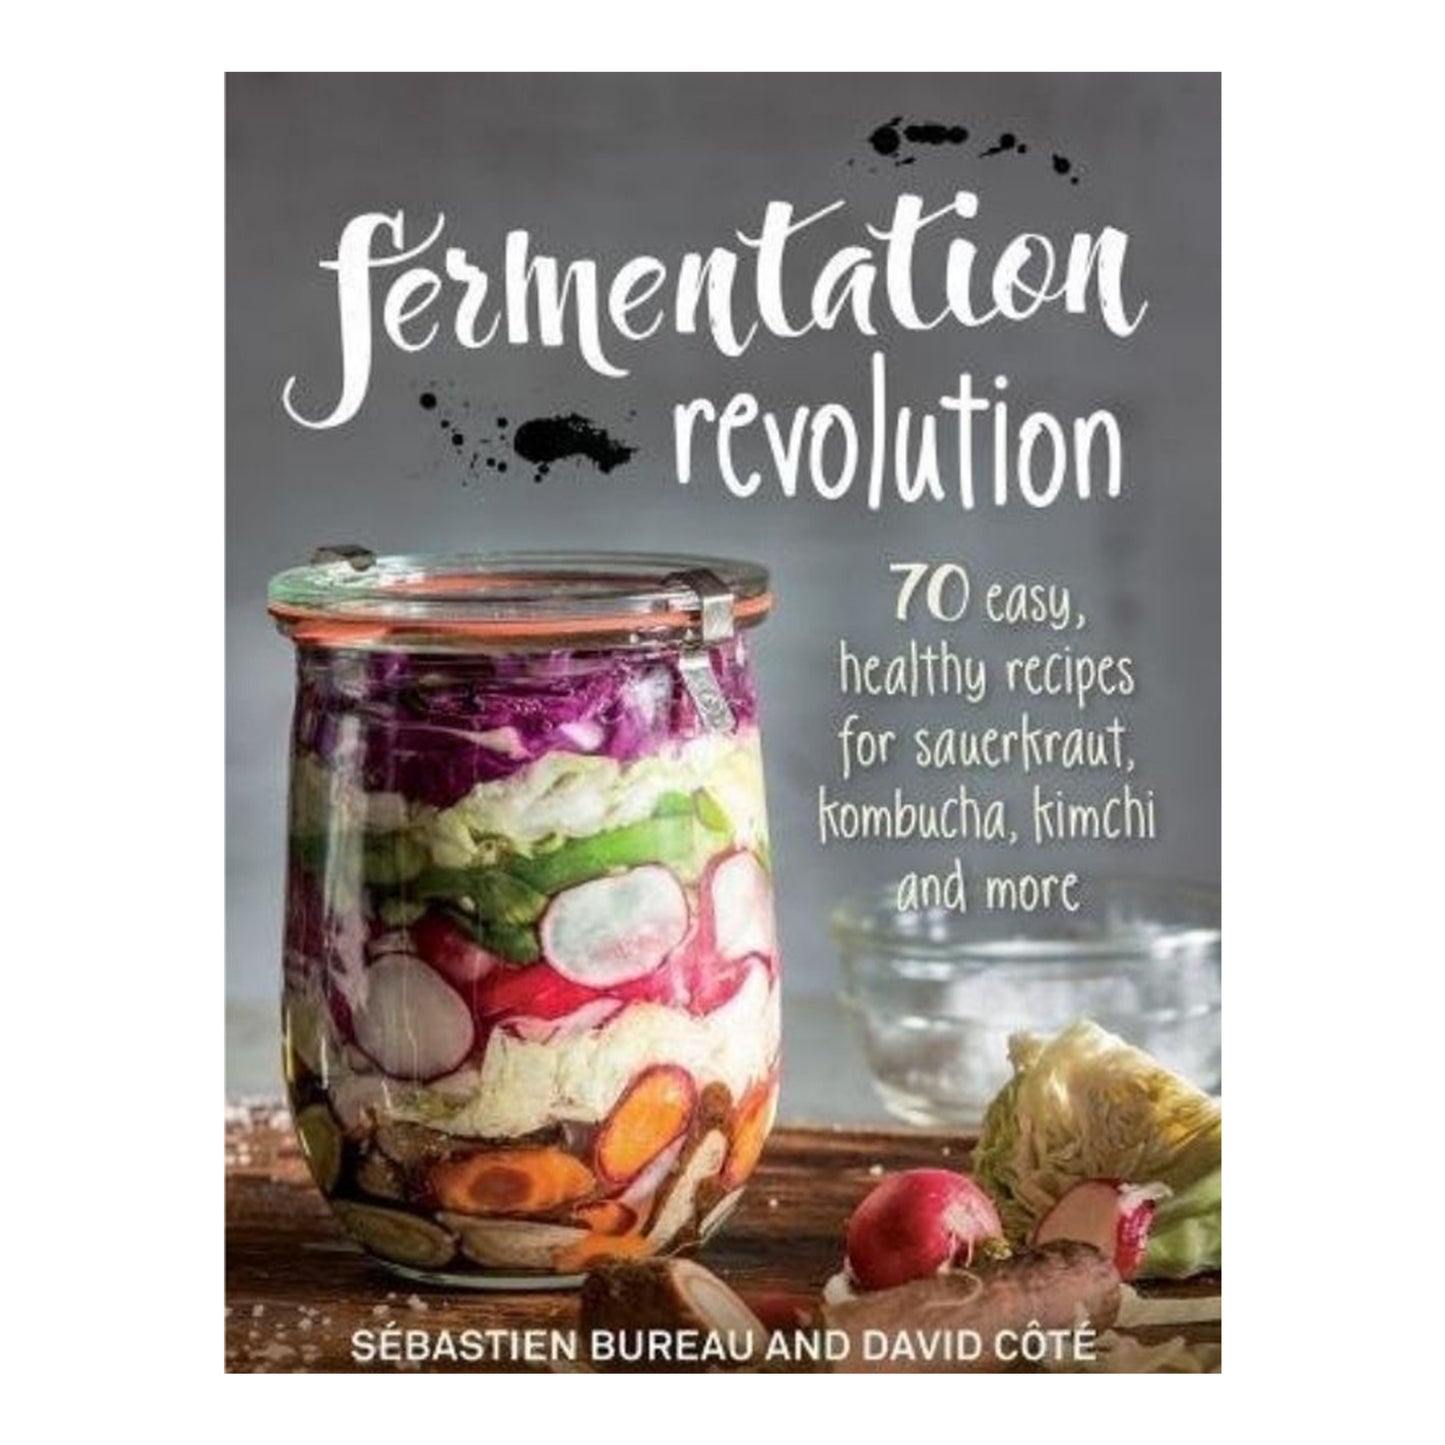 Fermentation Revolution by Sebastien Bureau and David Cote